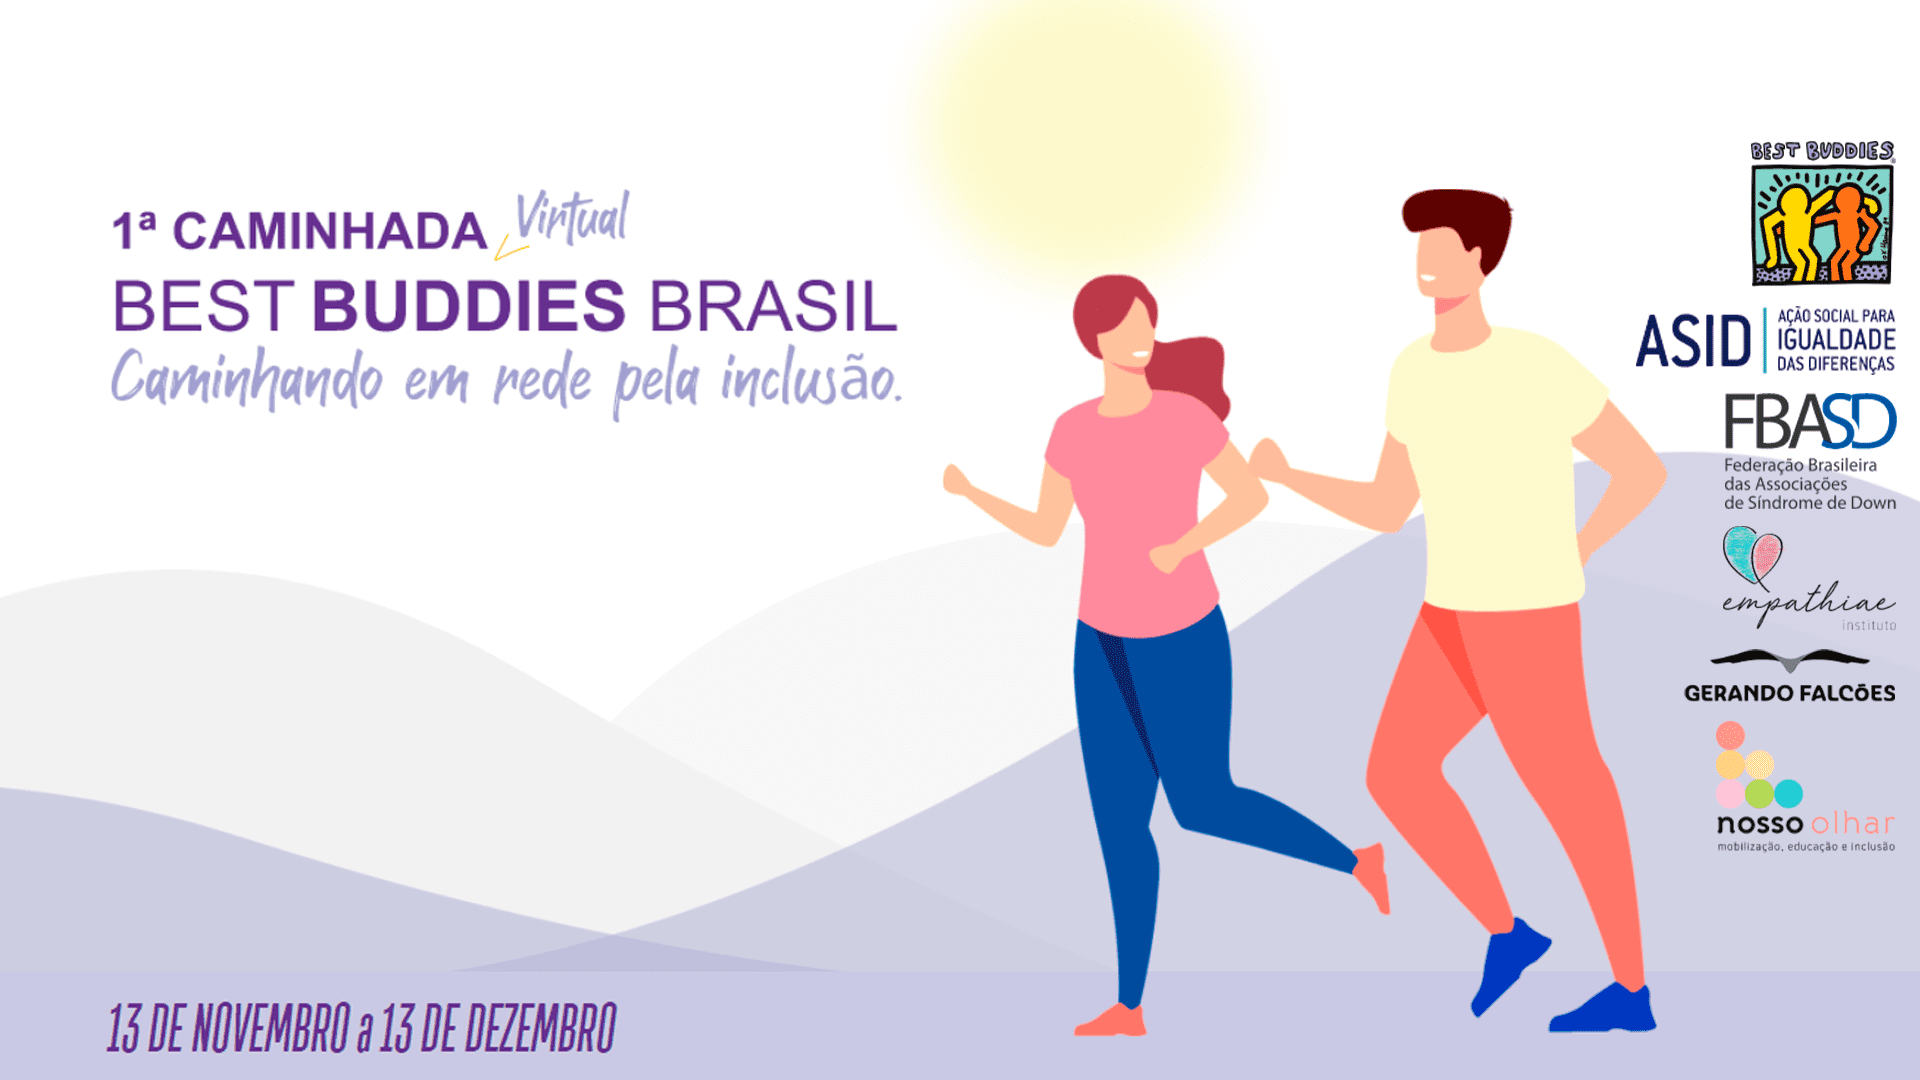 1ª Caminhada Virtual Best Buddies Brasil